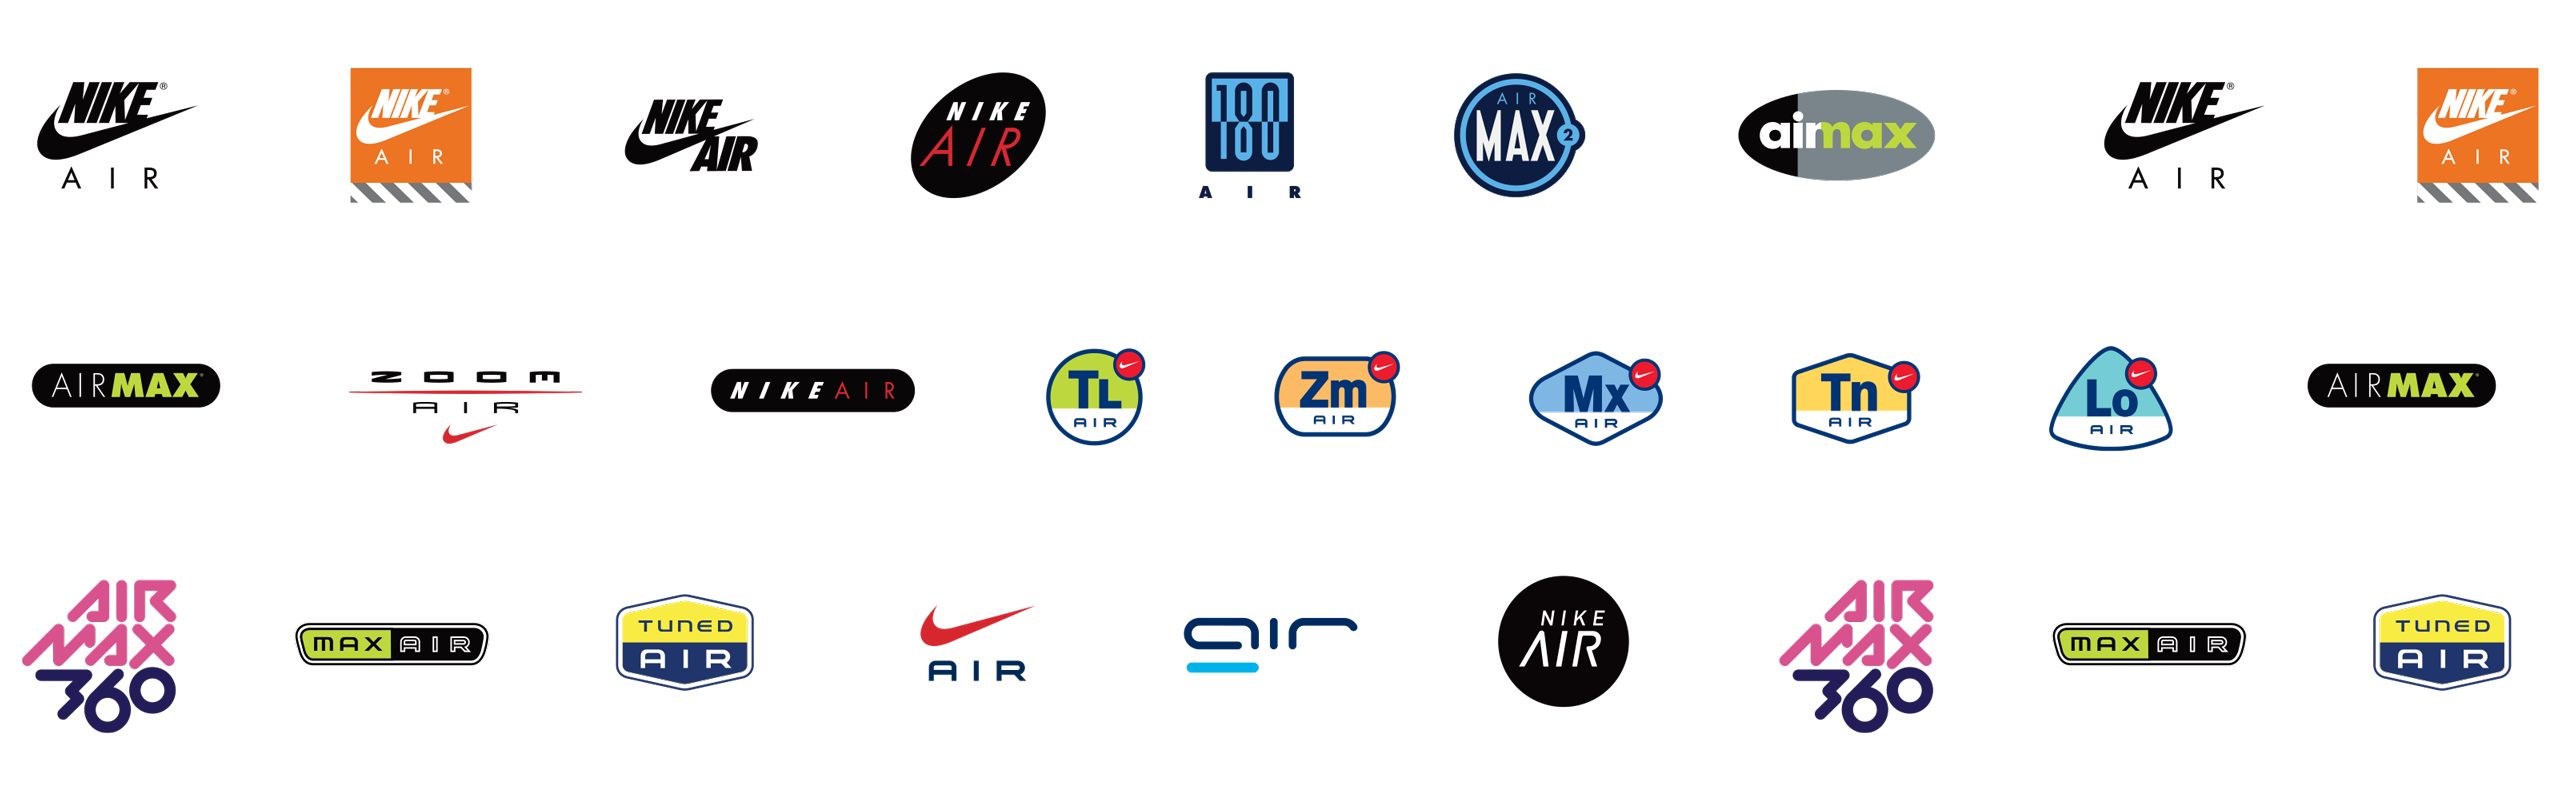 Nike Air Rebrand - Brian